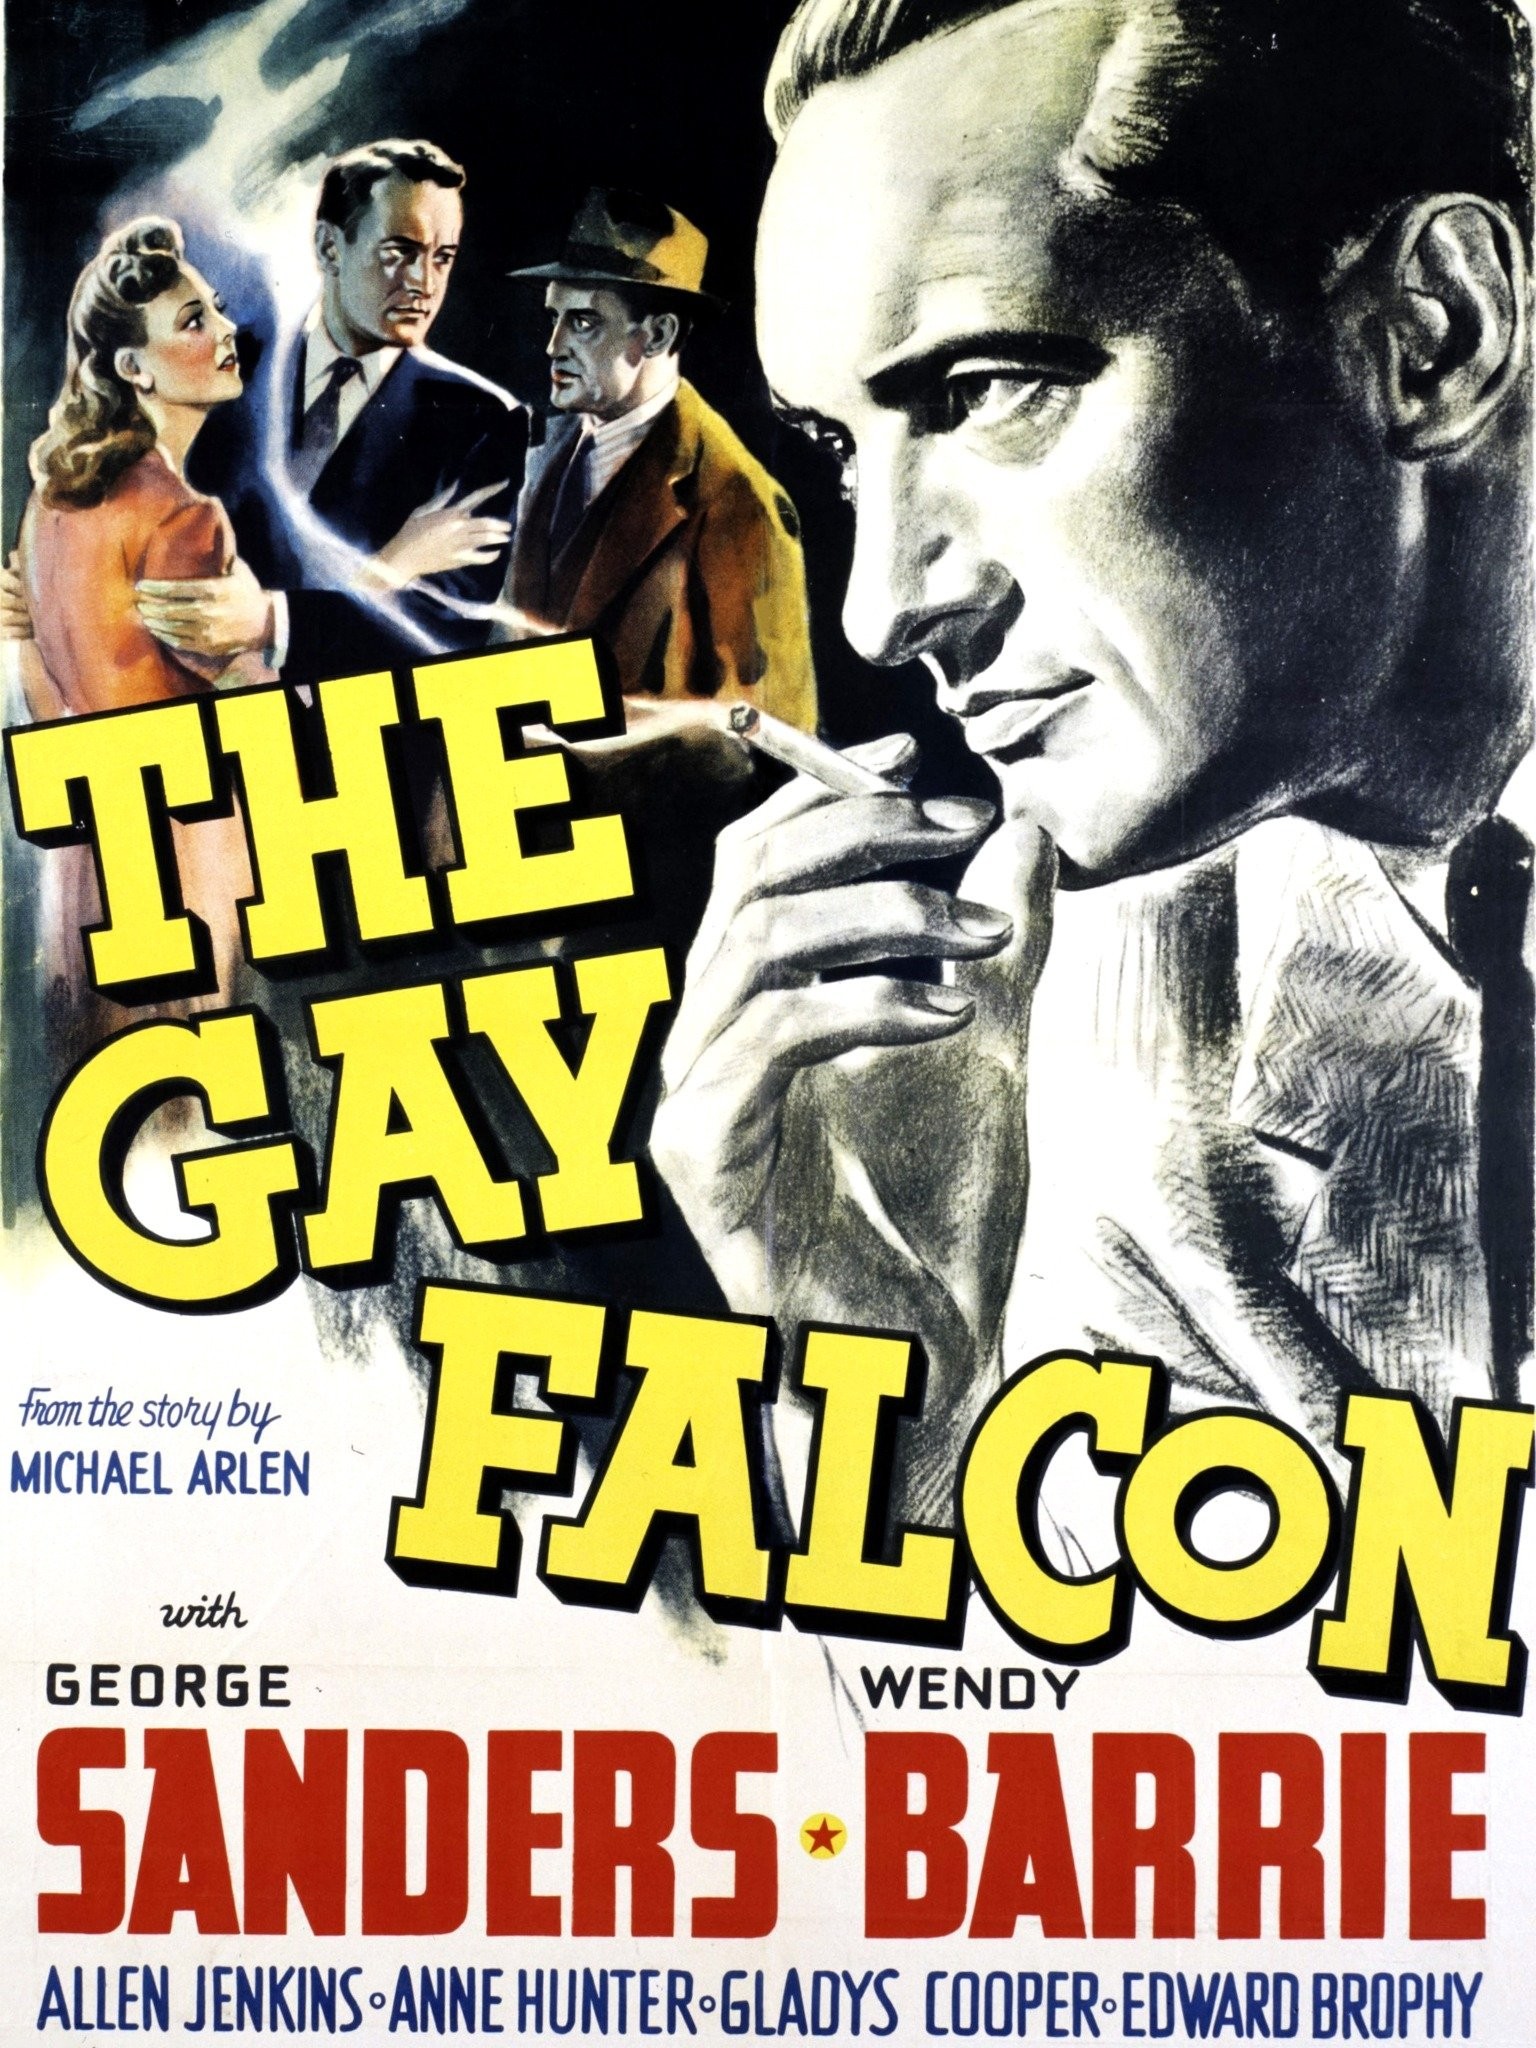 The gay falcon cast